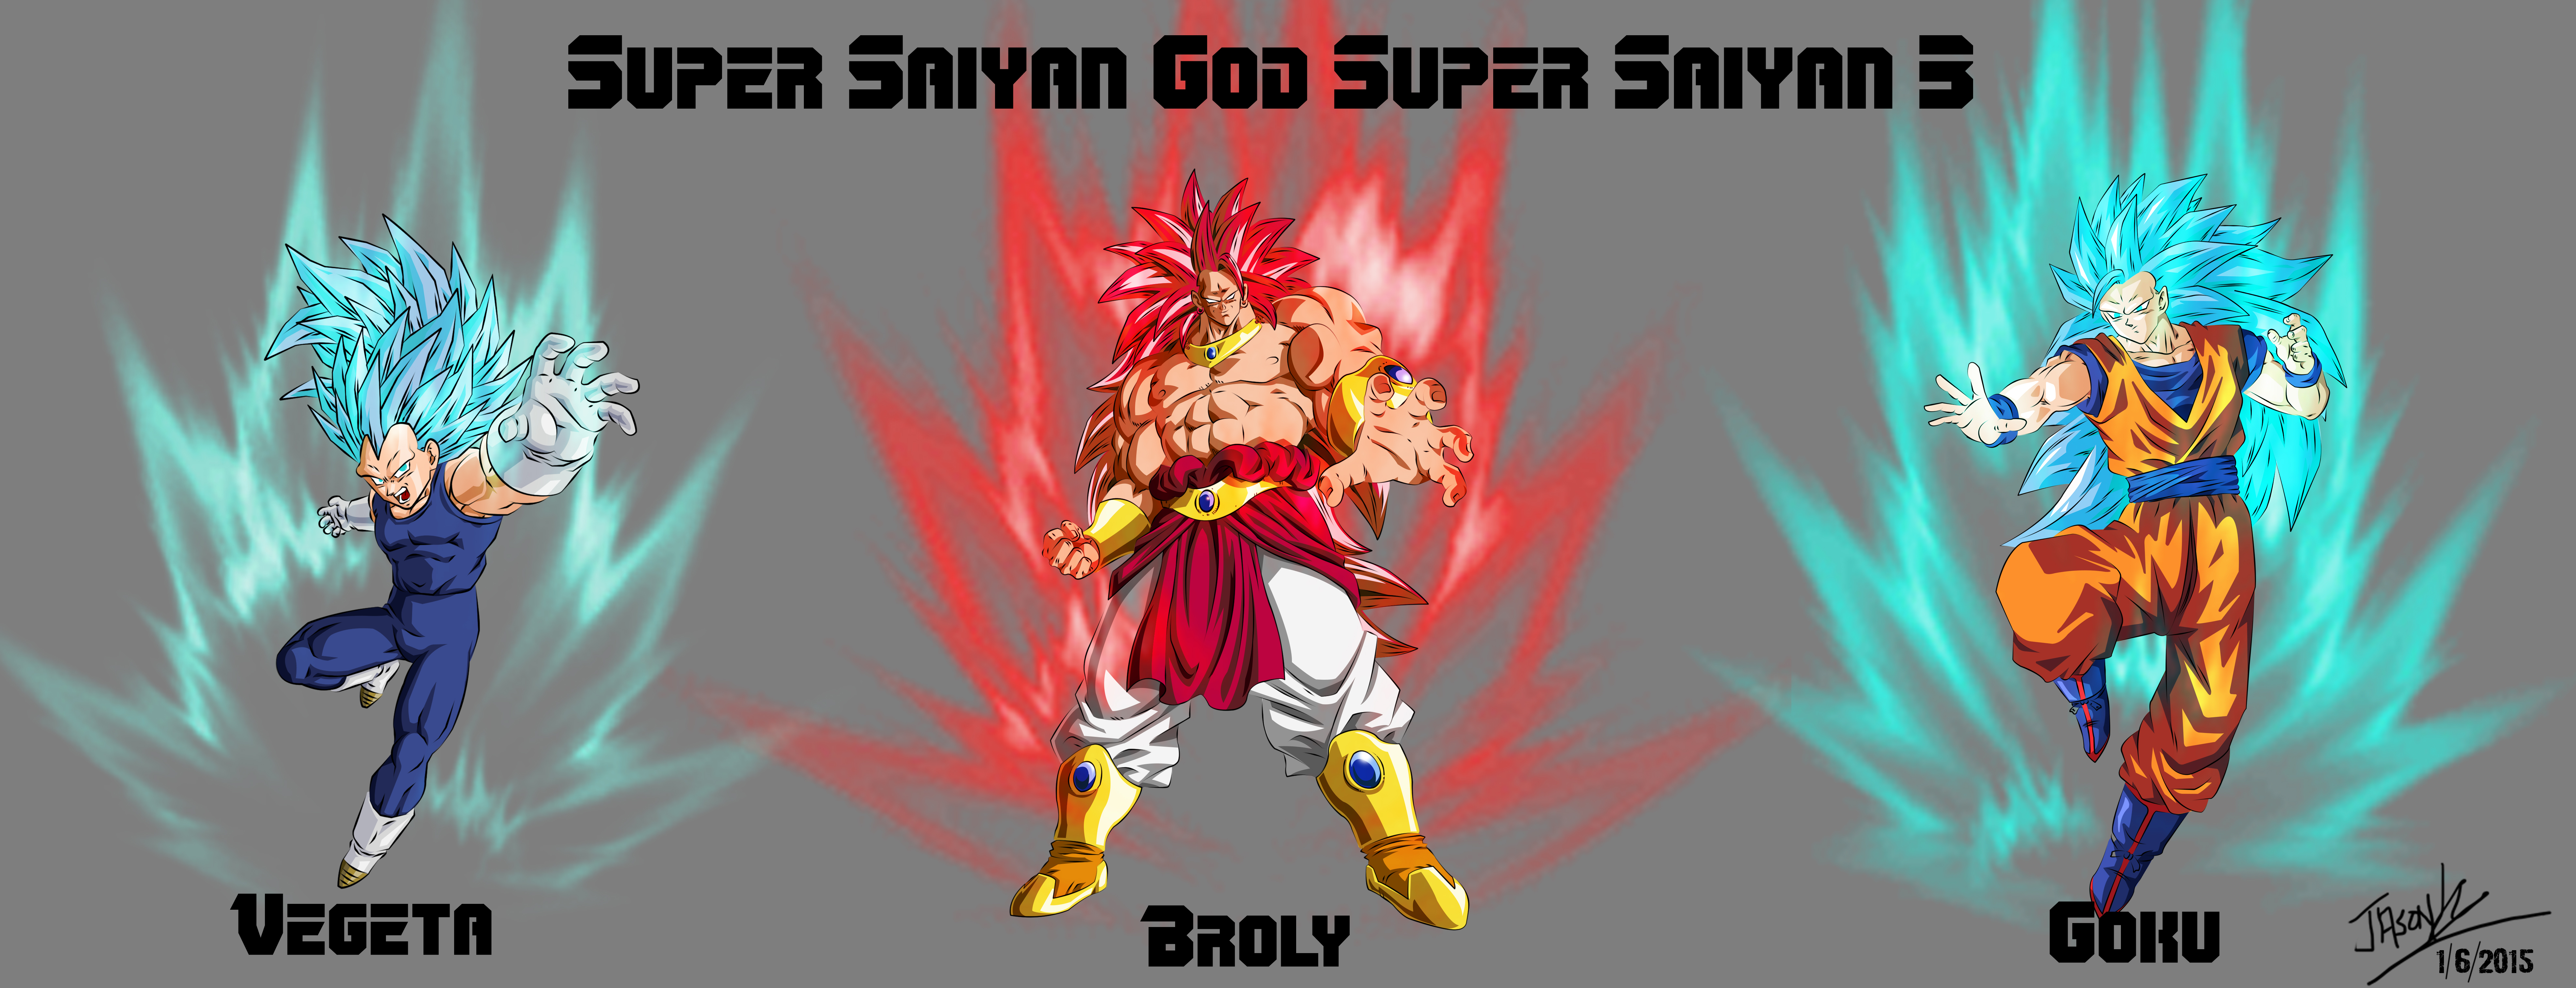 Deus Super Sayajin, Wiki